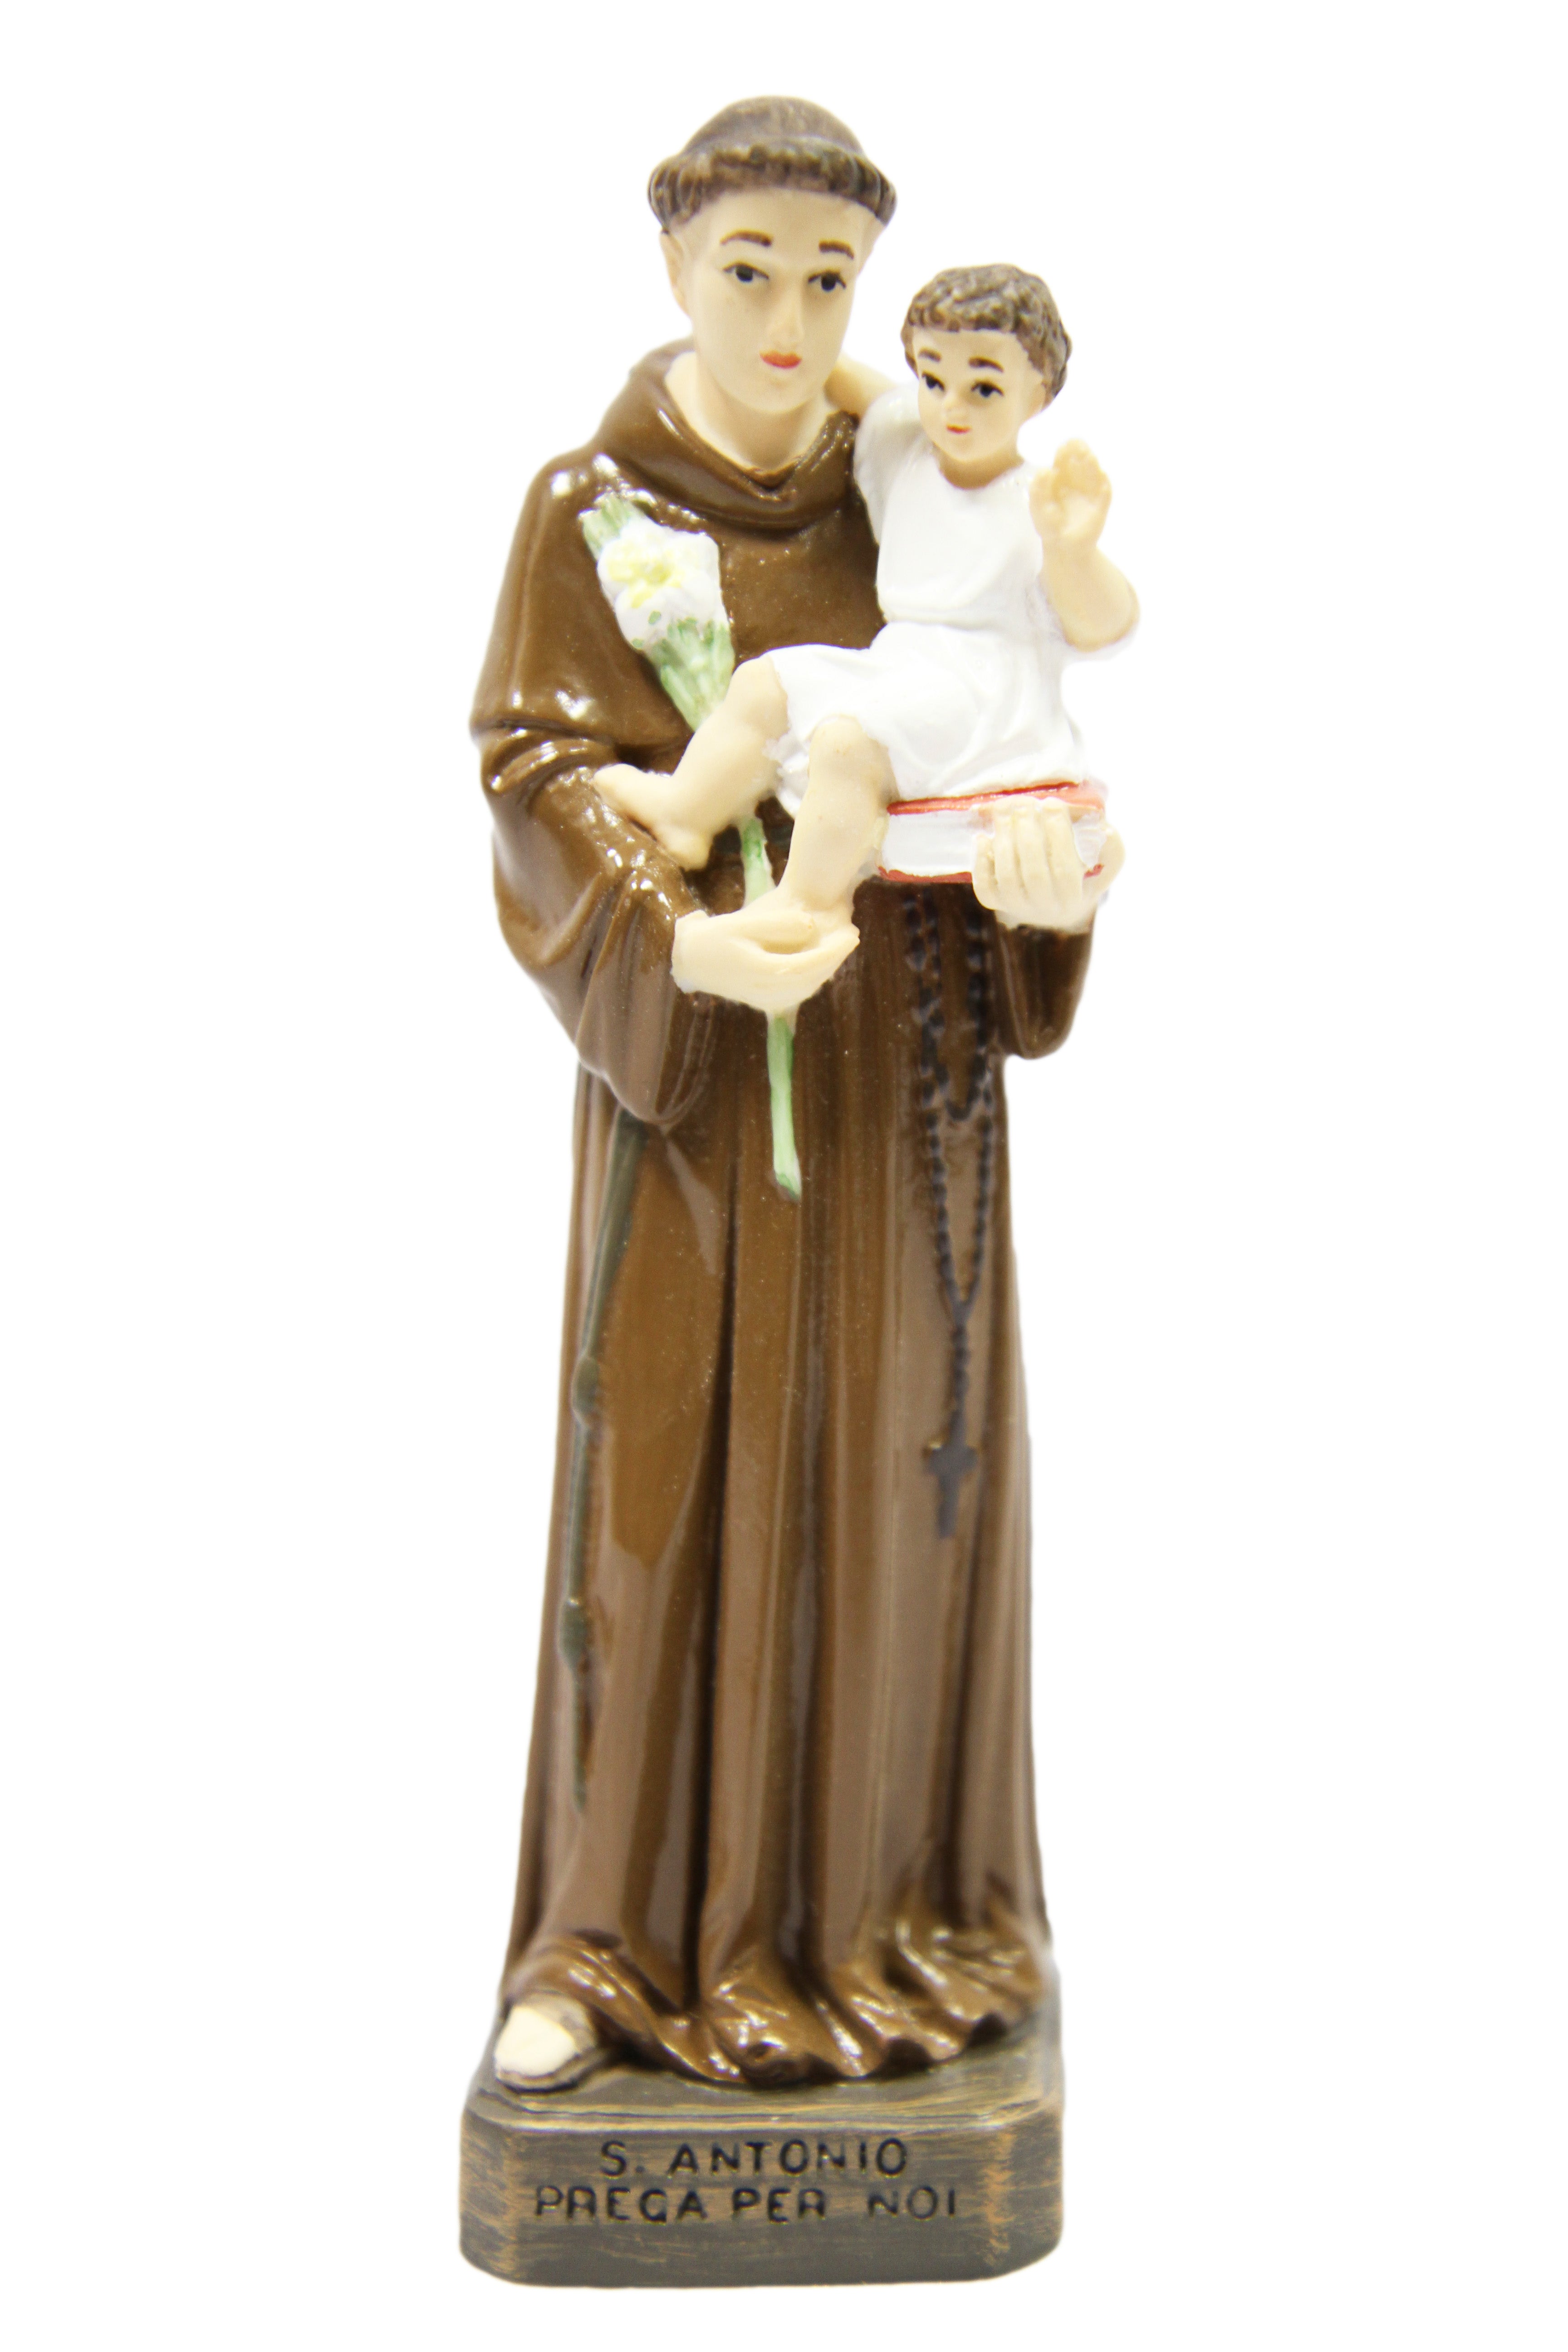 6" Saint Anthony De Padua Catholic Religious Statue Figurine Vittoria Collection Made in Italy